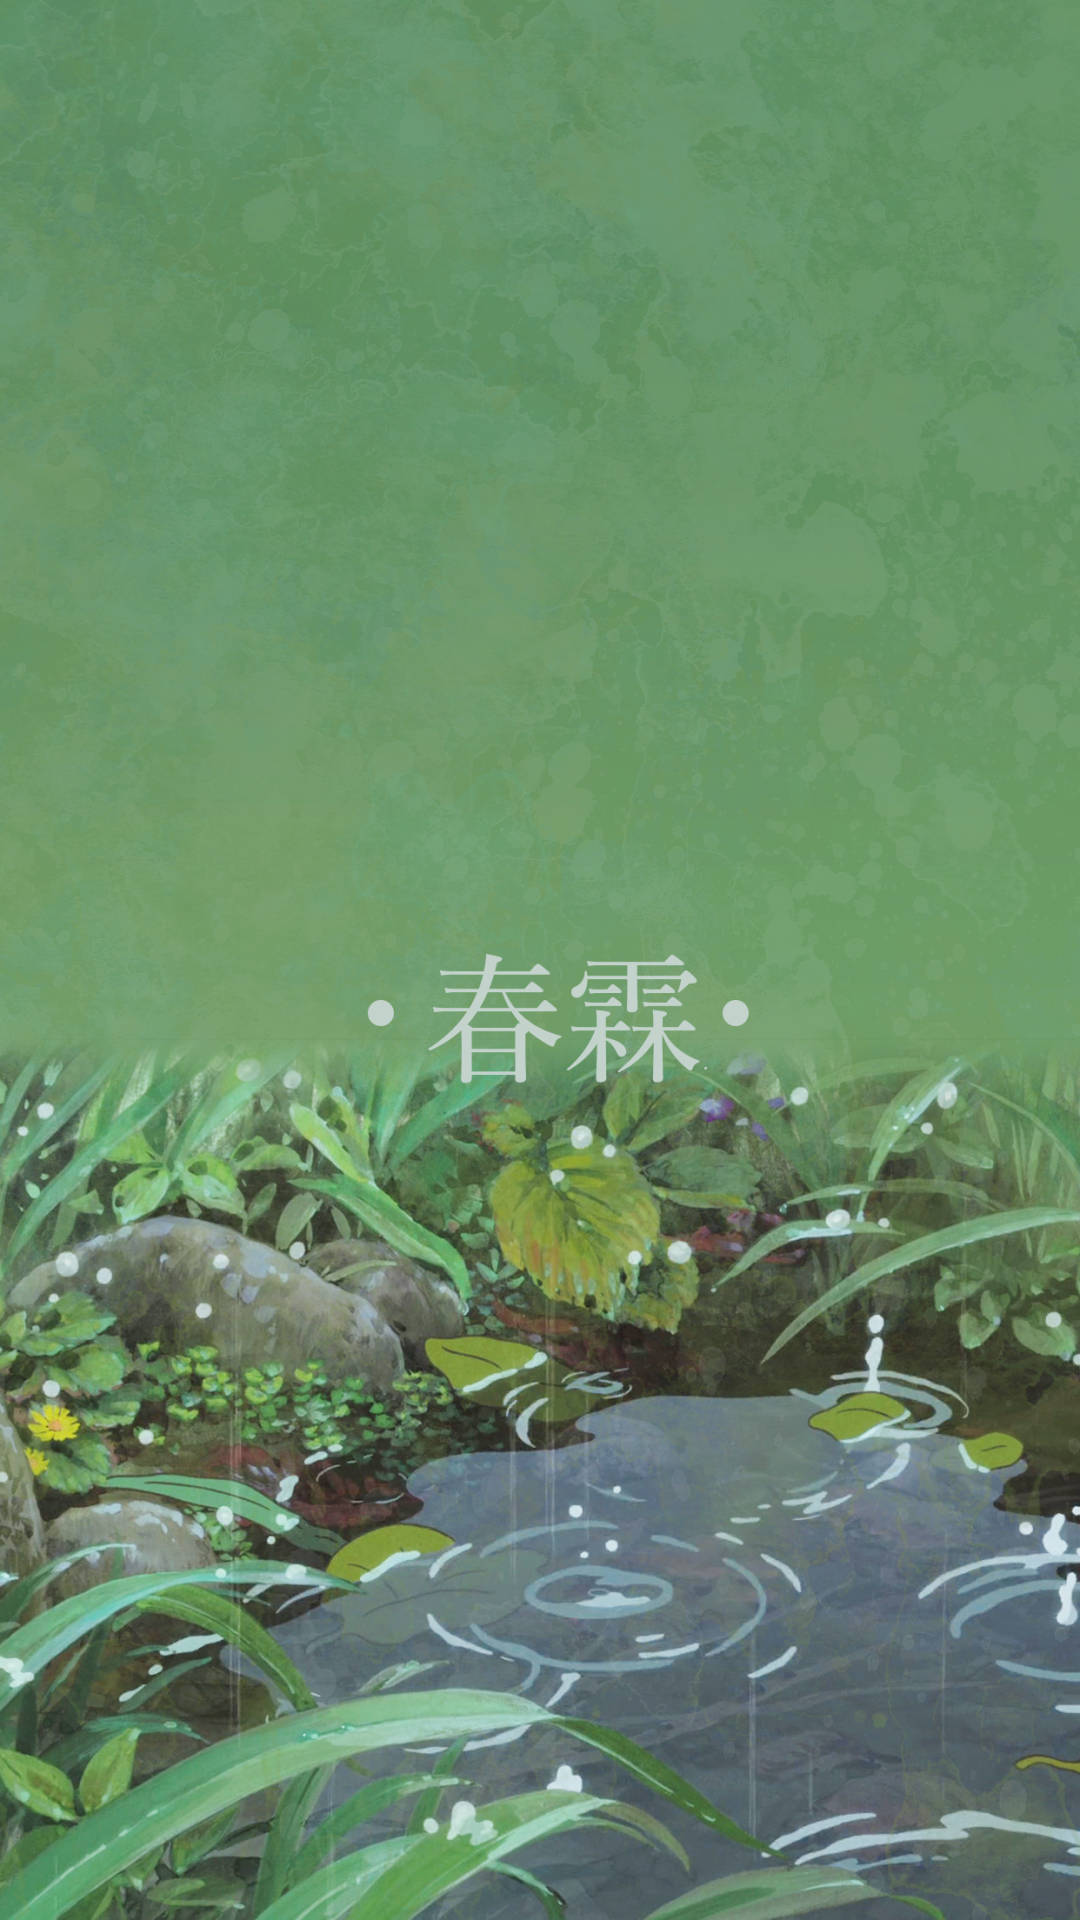 Litendamm I Regnet Grön Anime-estetik. Wallpaper